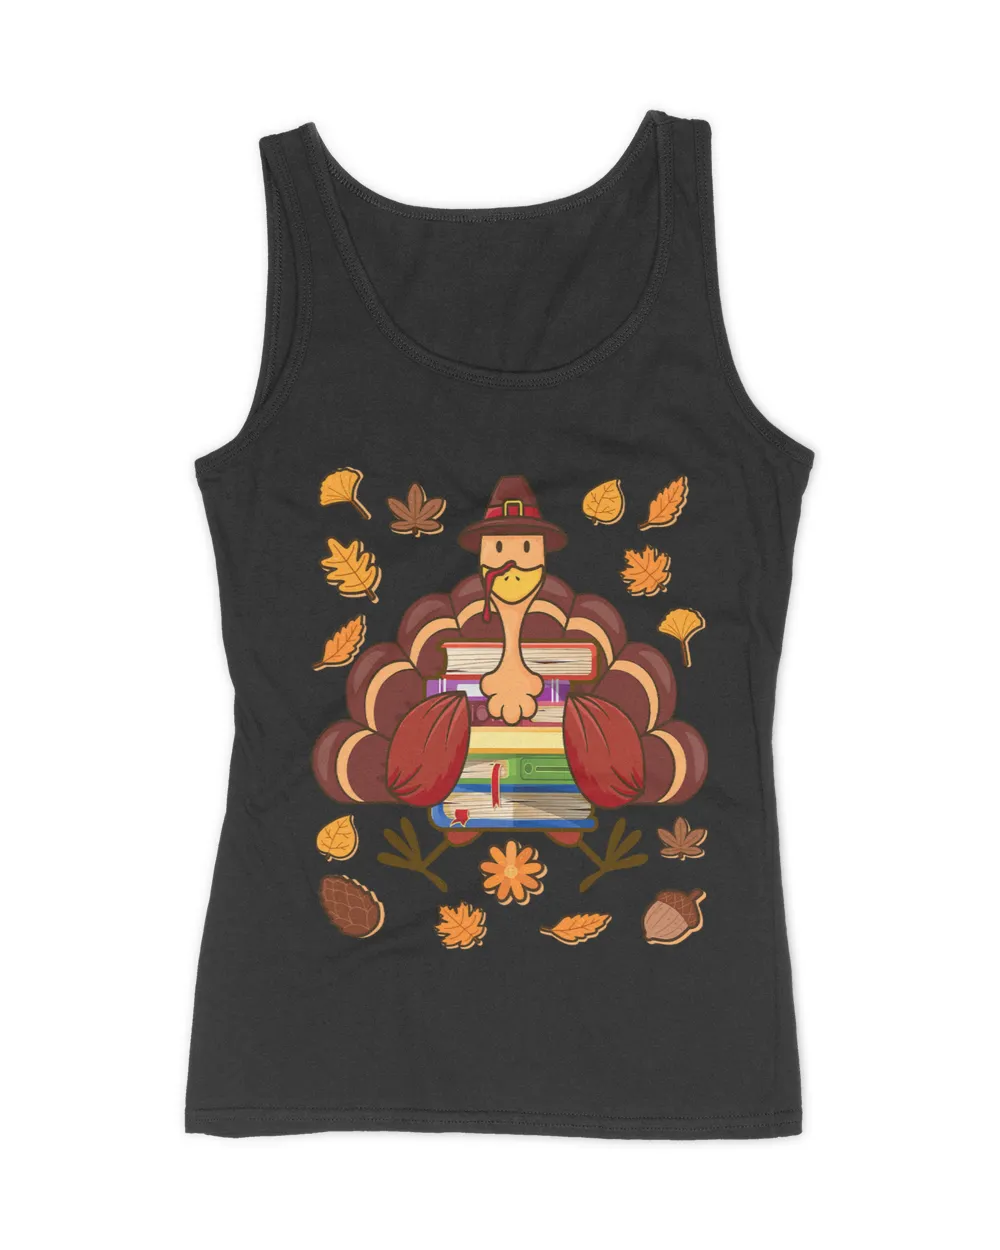 Librarian Book Lover Reader Funny Turkey Thanksgiving Fall